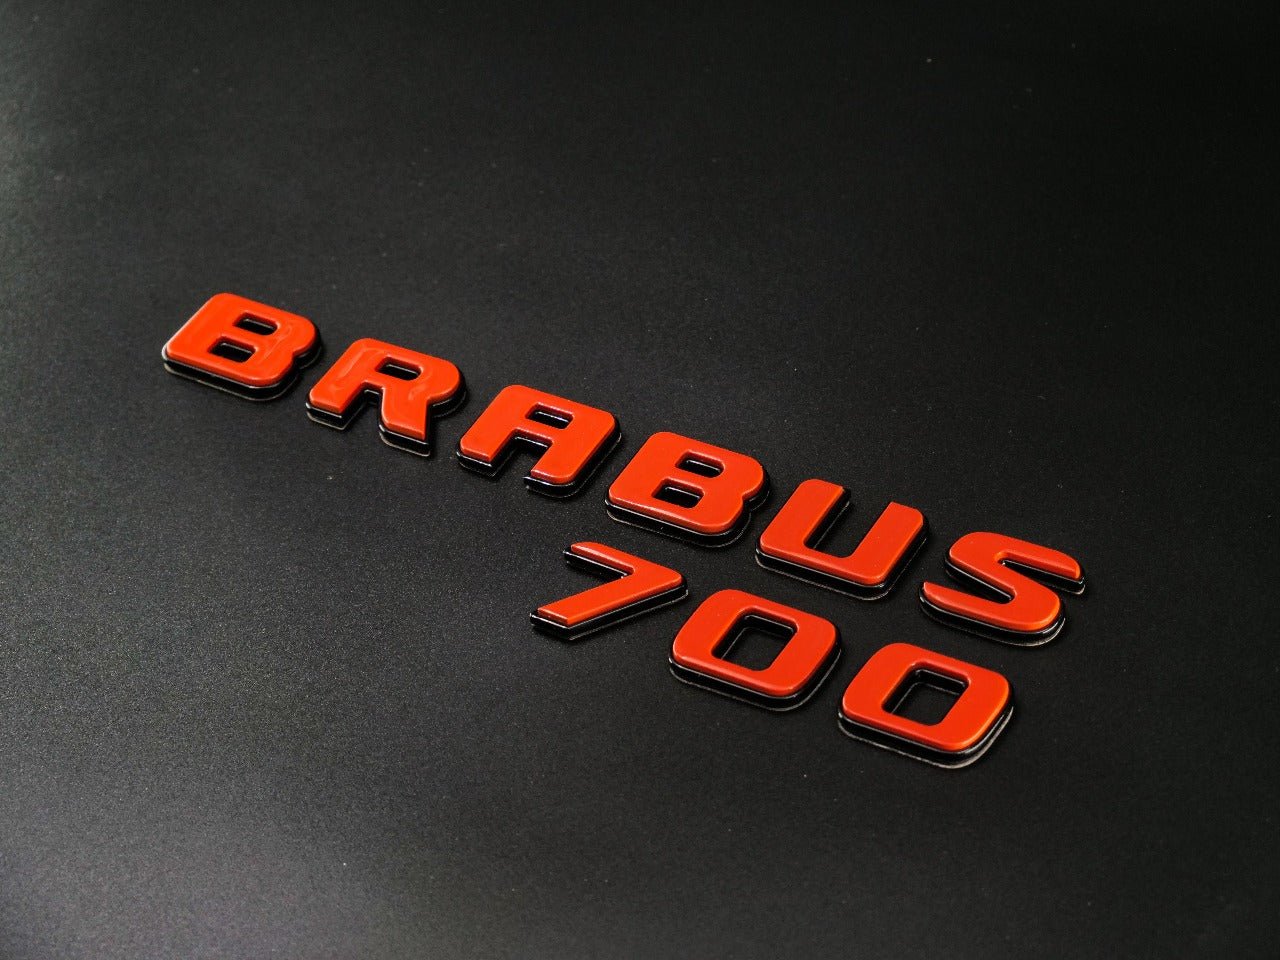 Metallic Black + Orange Brabus 700 emblems badges set for Mercedes-Benz G-Class W463 W463A W464